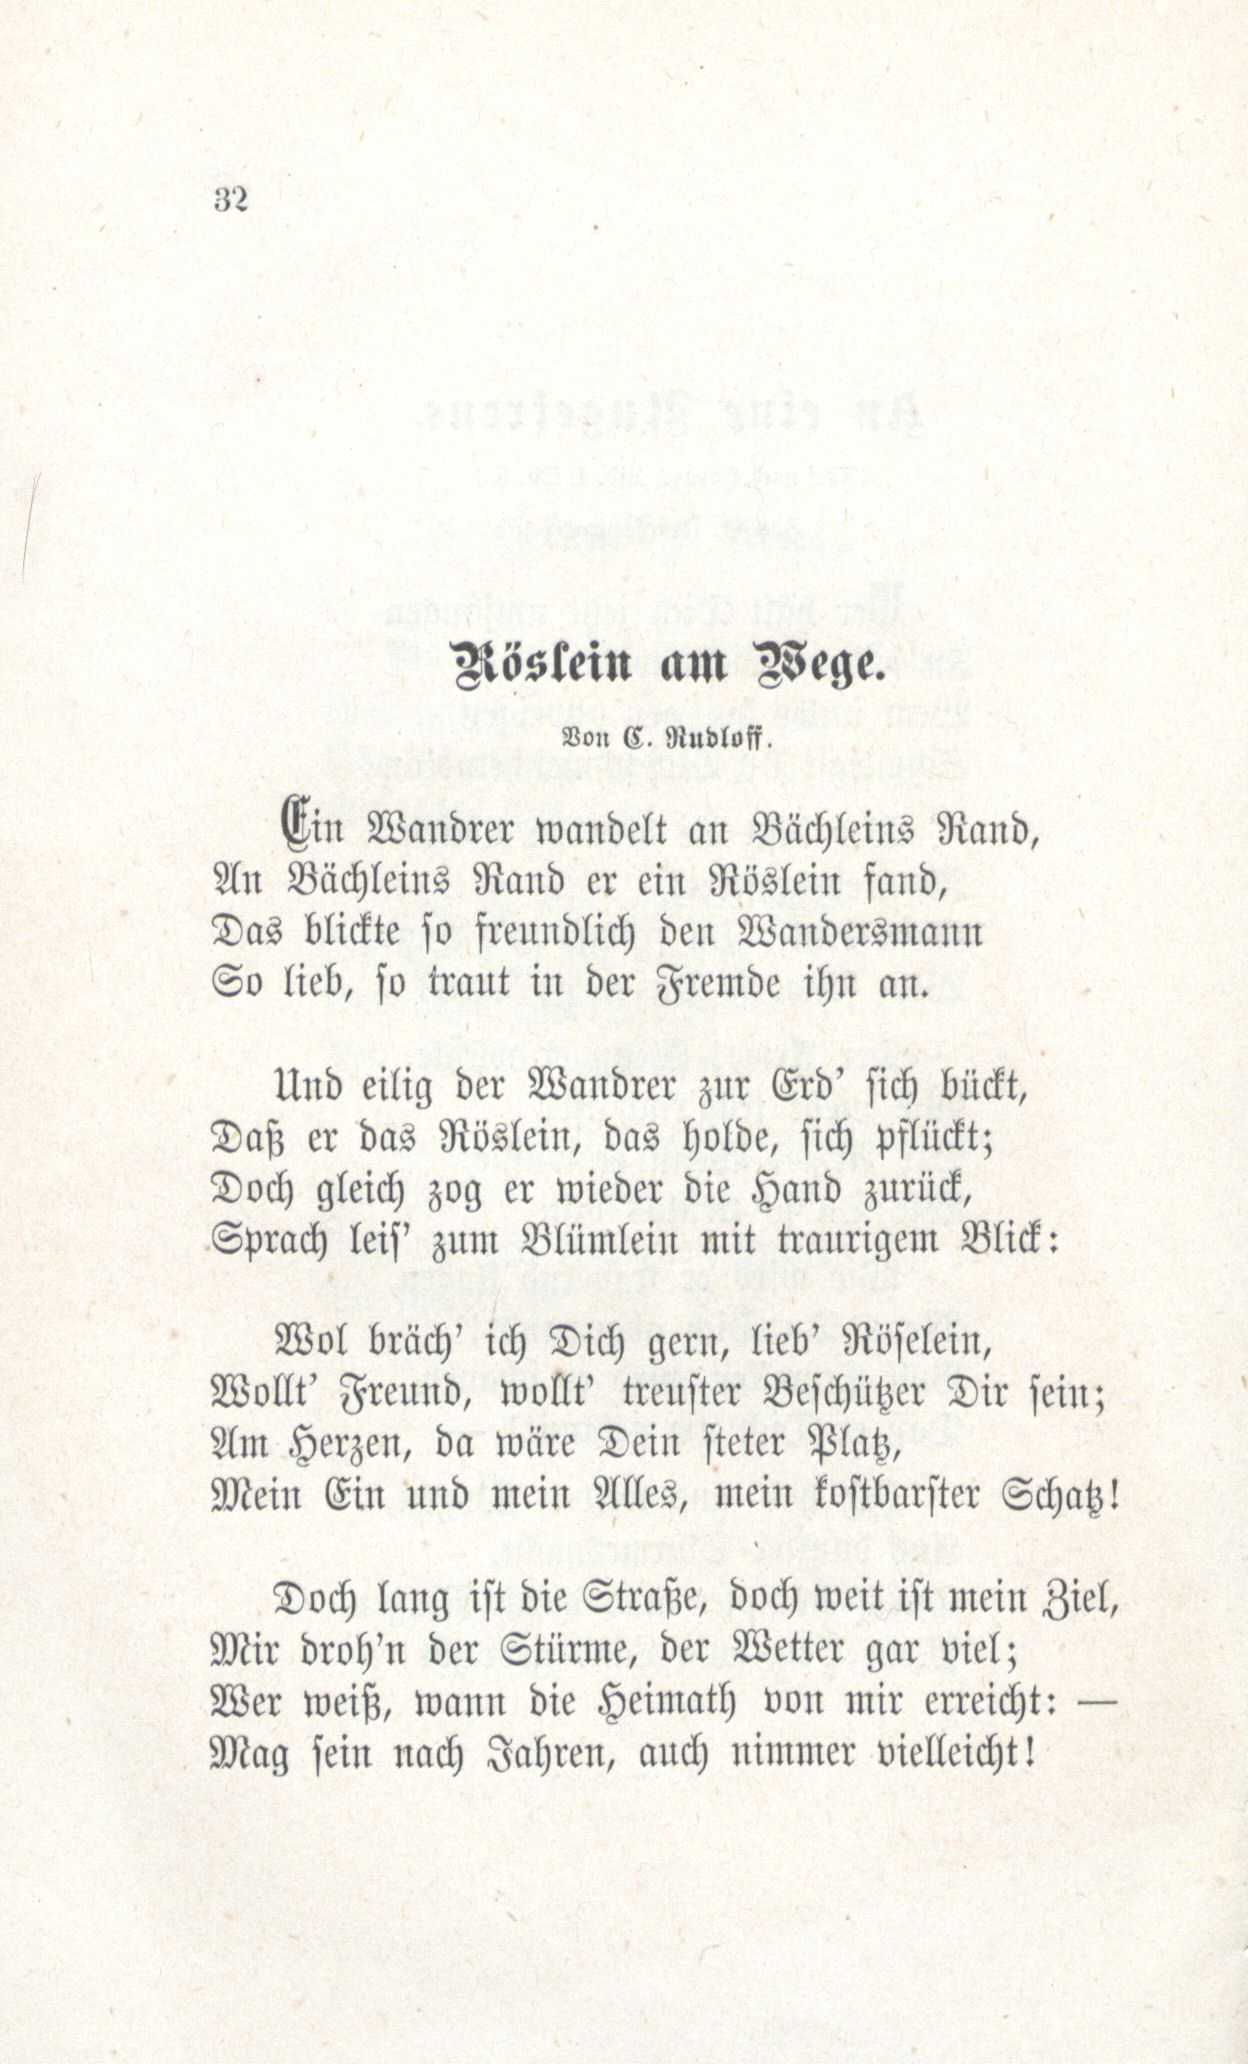 Erinnerung an die Fraternitas (1880) | 33. (32) Main body of text